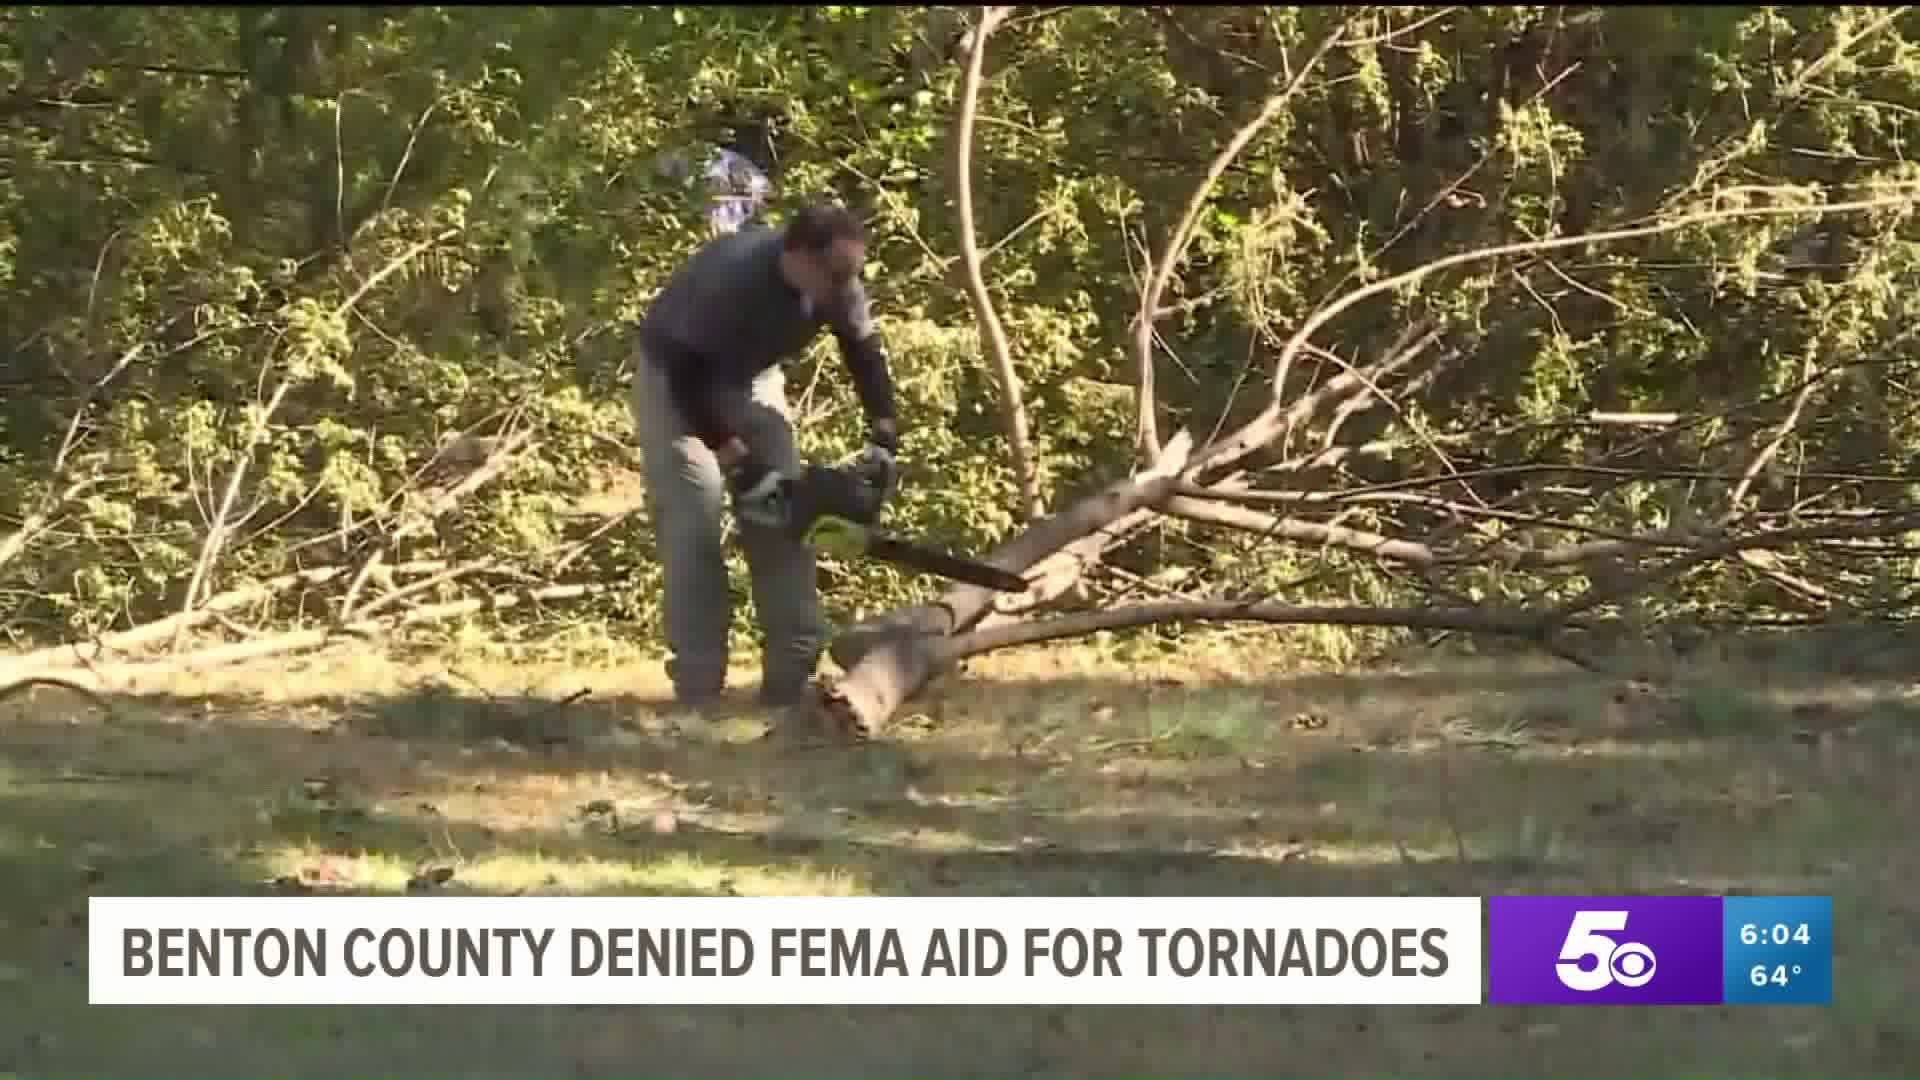 Benton County Denied FEMA Aid After Two Tornadoes